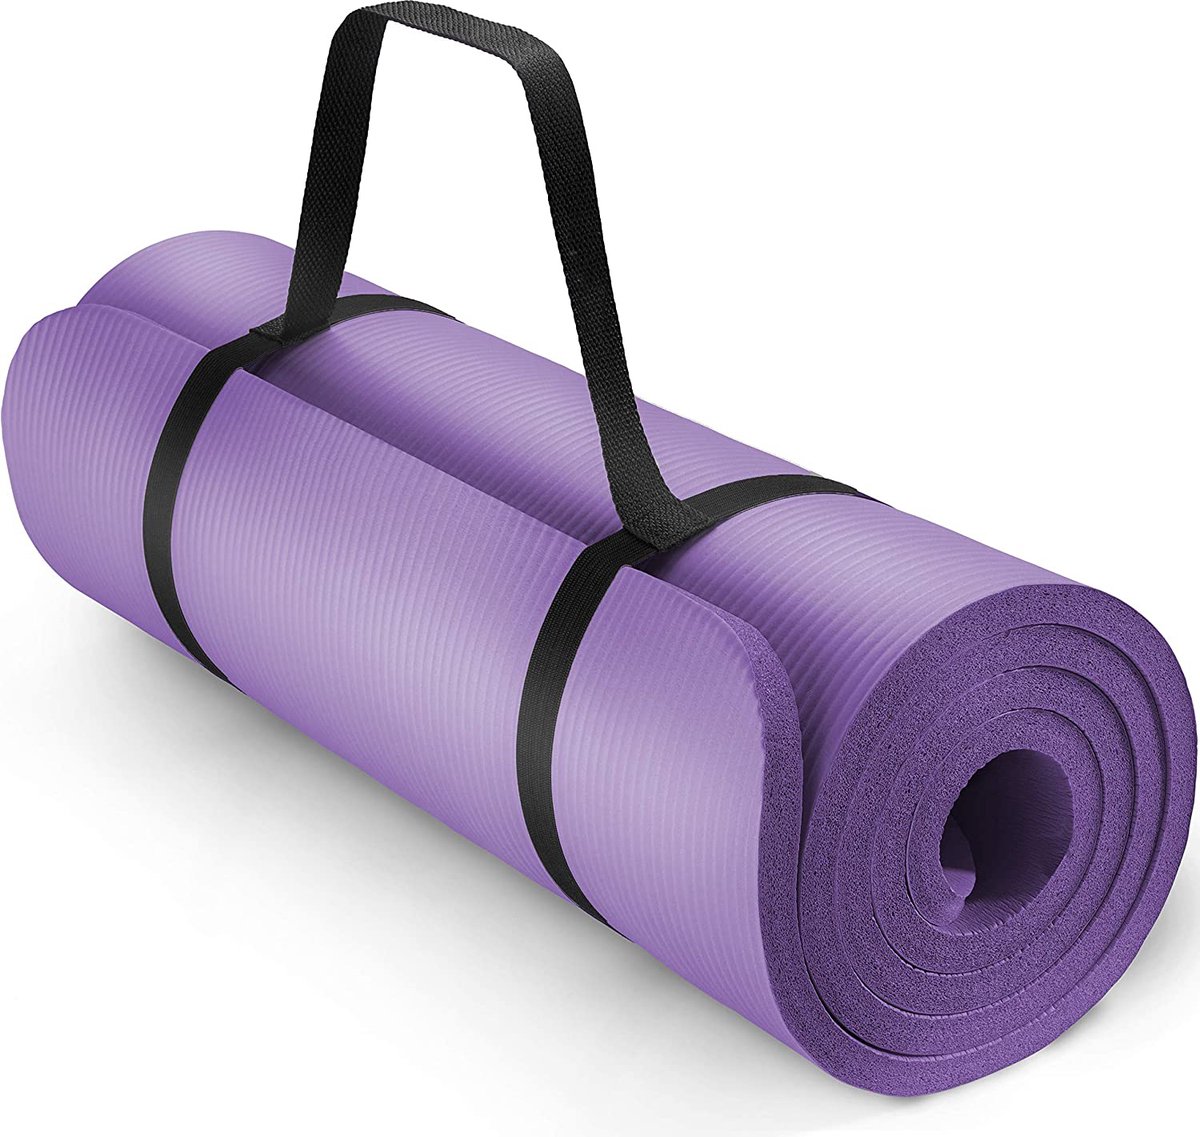 Sens Design Fitnessmat - Yogamat - 185 x 60 cm - 1.5cm dik - Lila